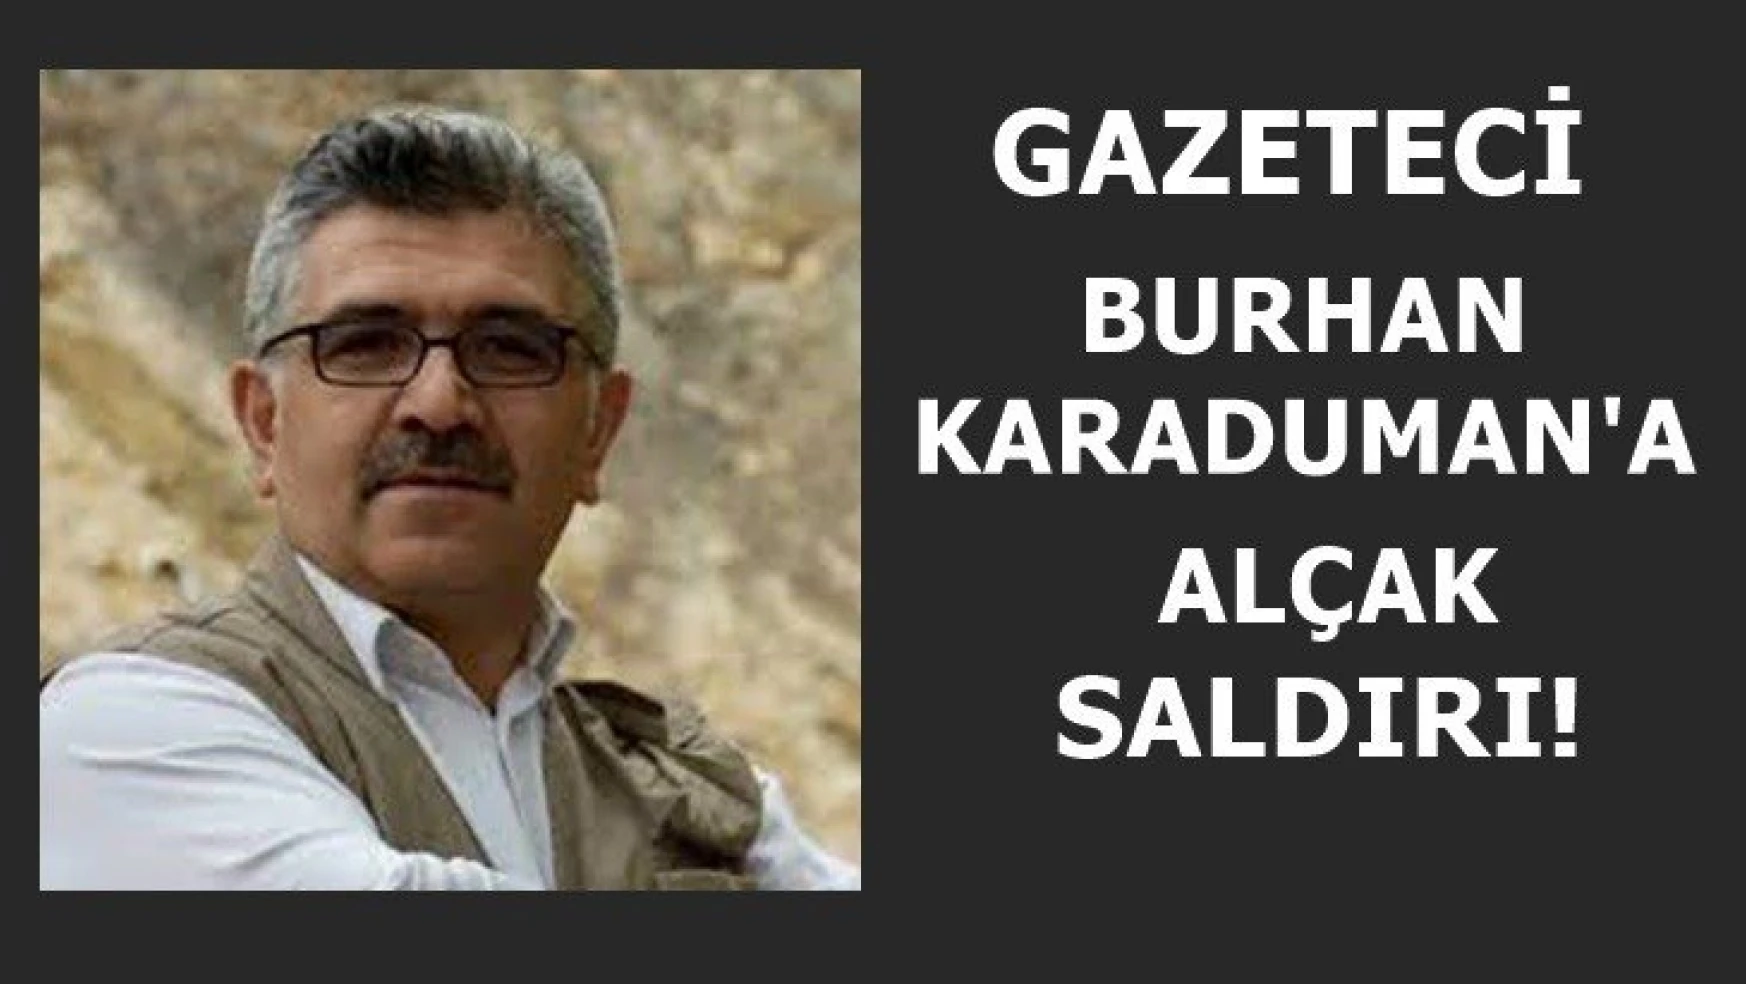 Gazeteci Burhan Karaduman'a alçak saldırı!